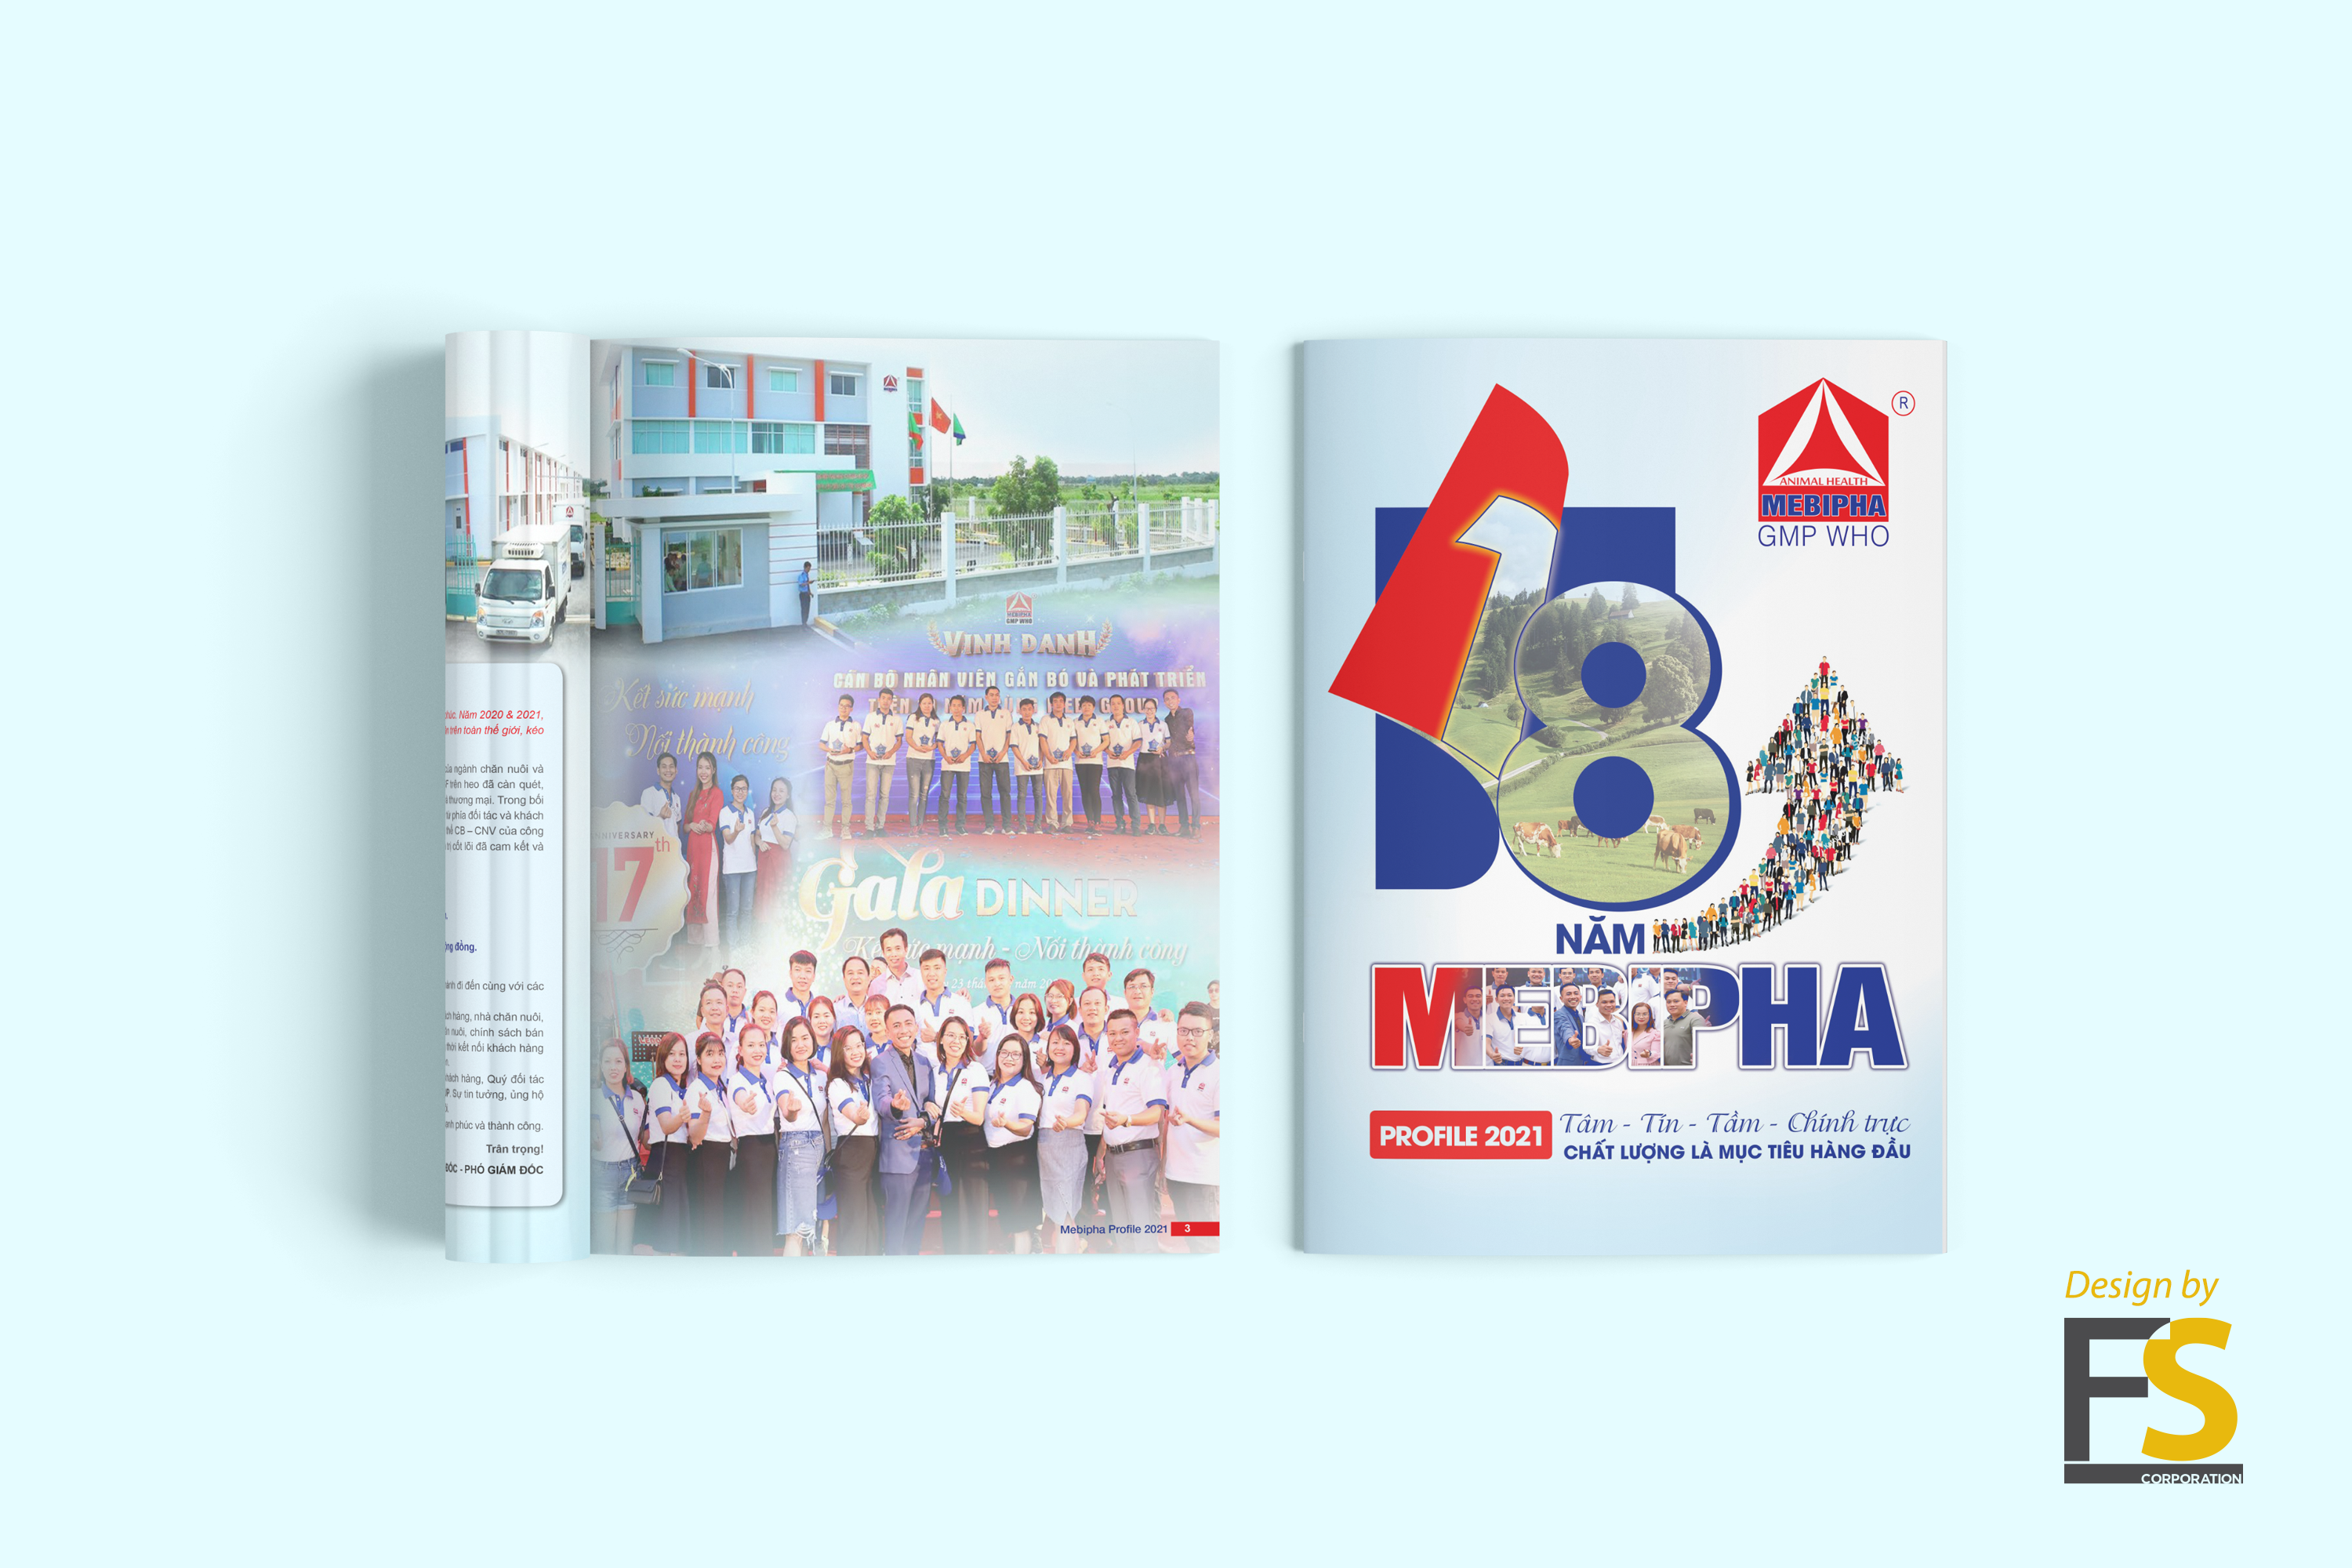 Thiết kế profile Mebipha - FS Design